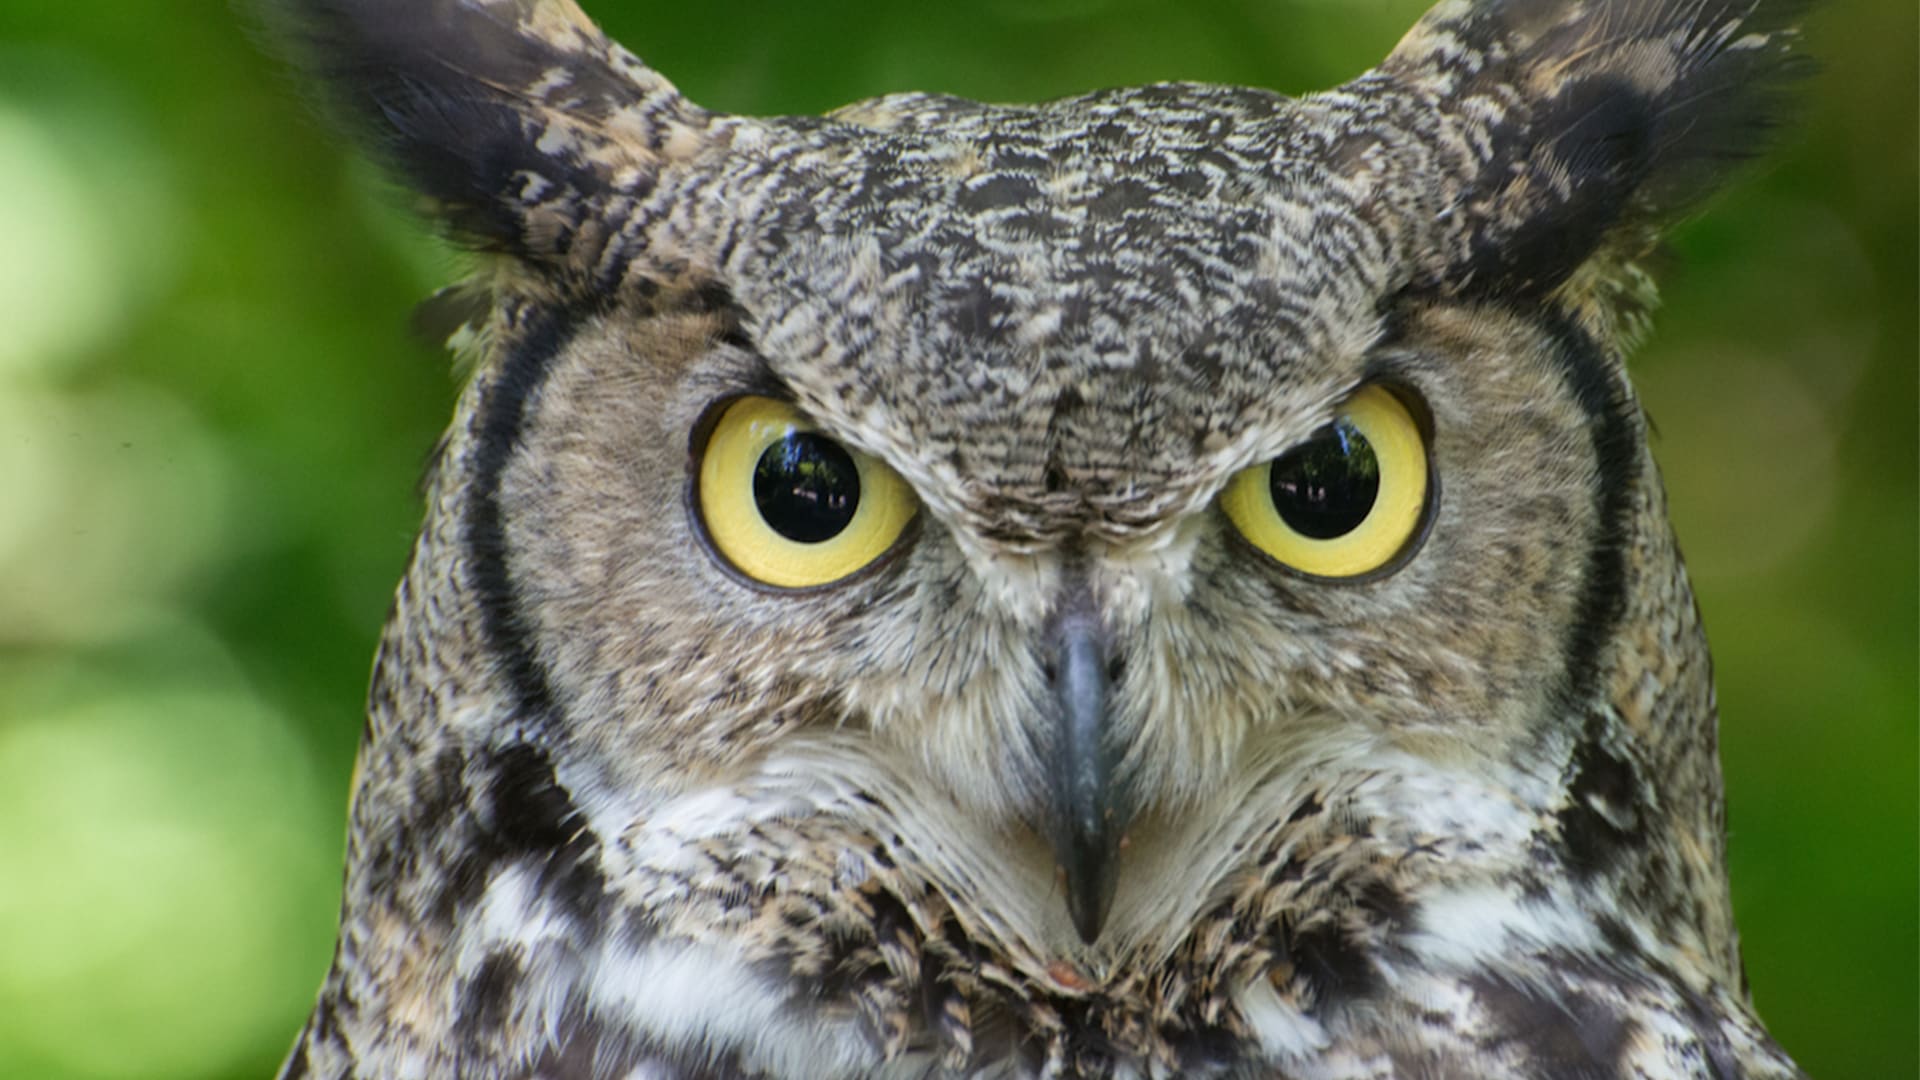 Why do owls say "hoo"?